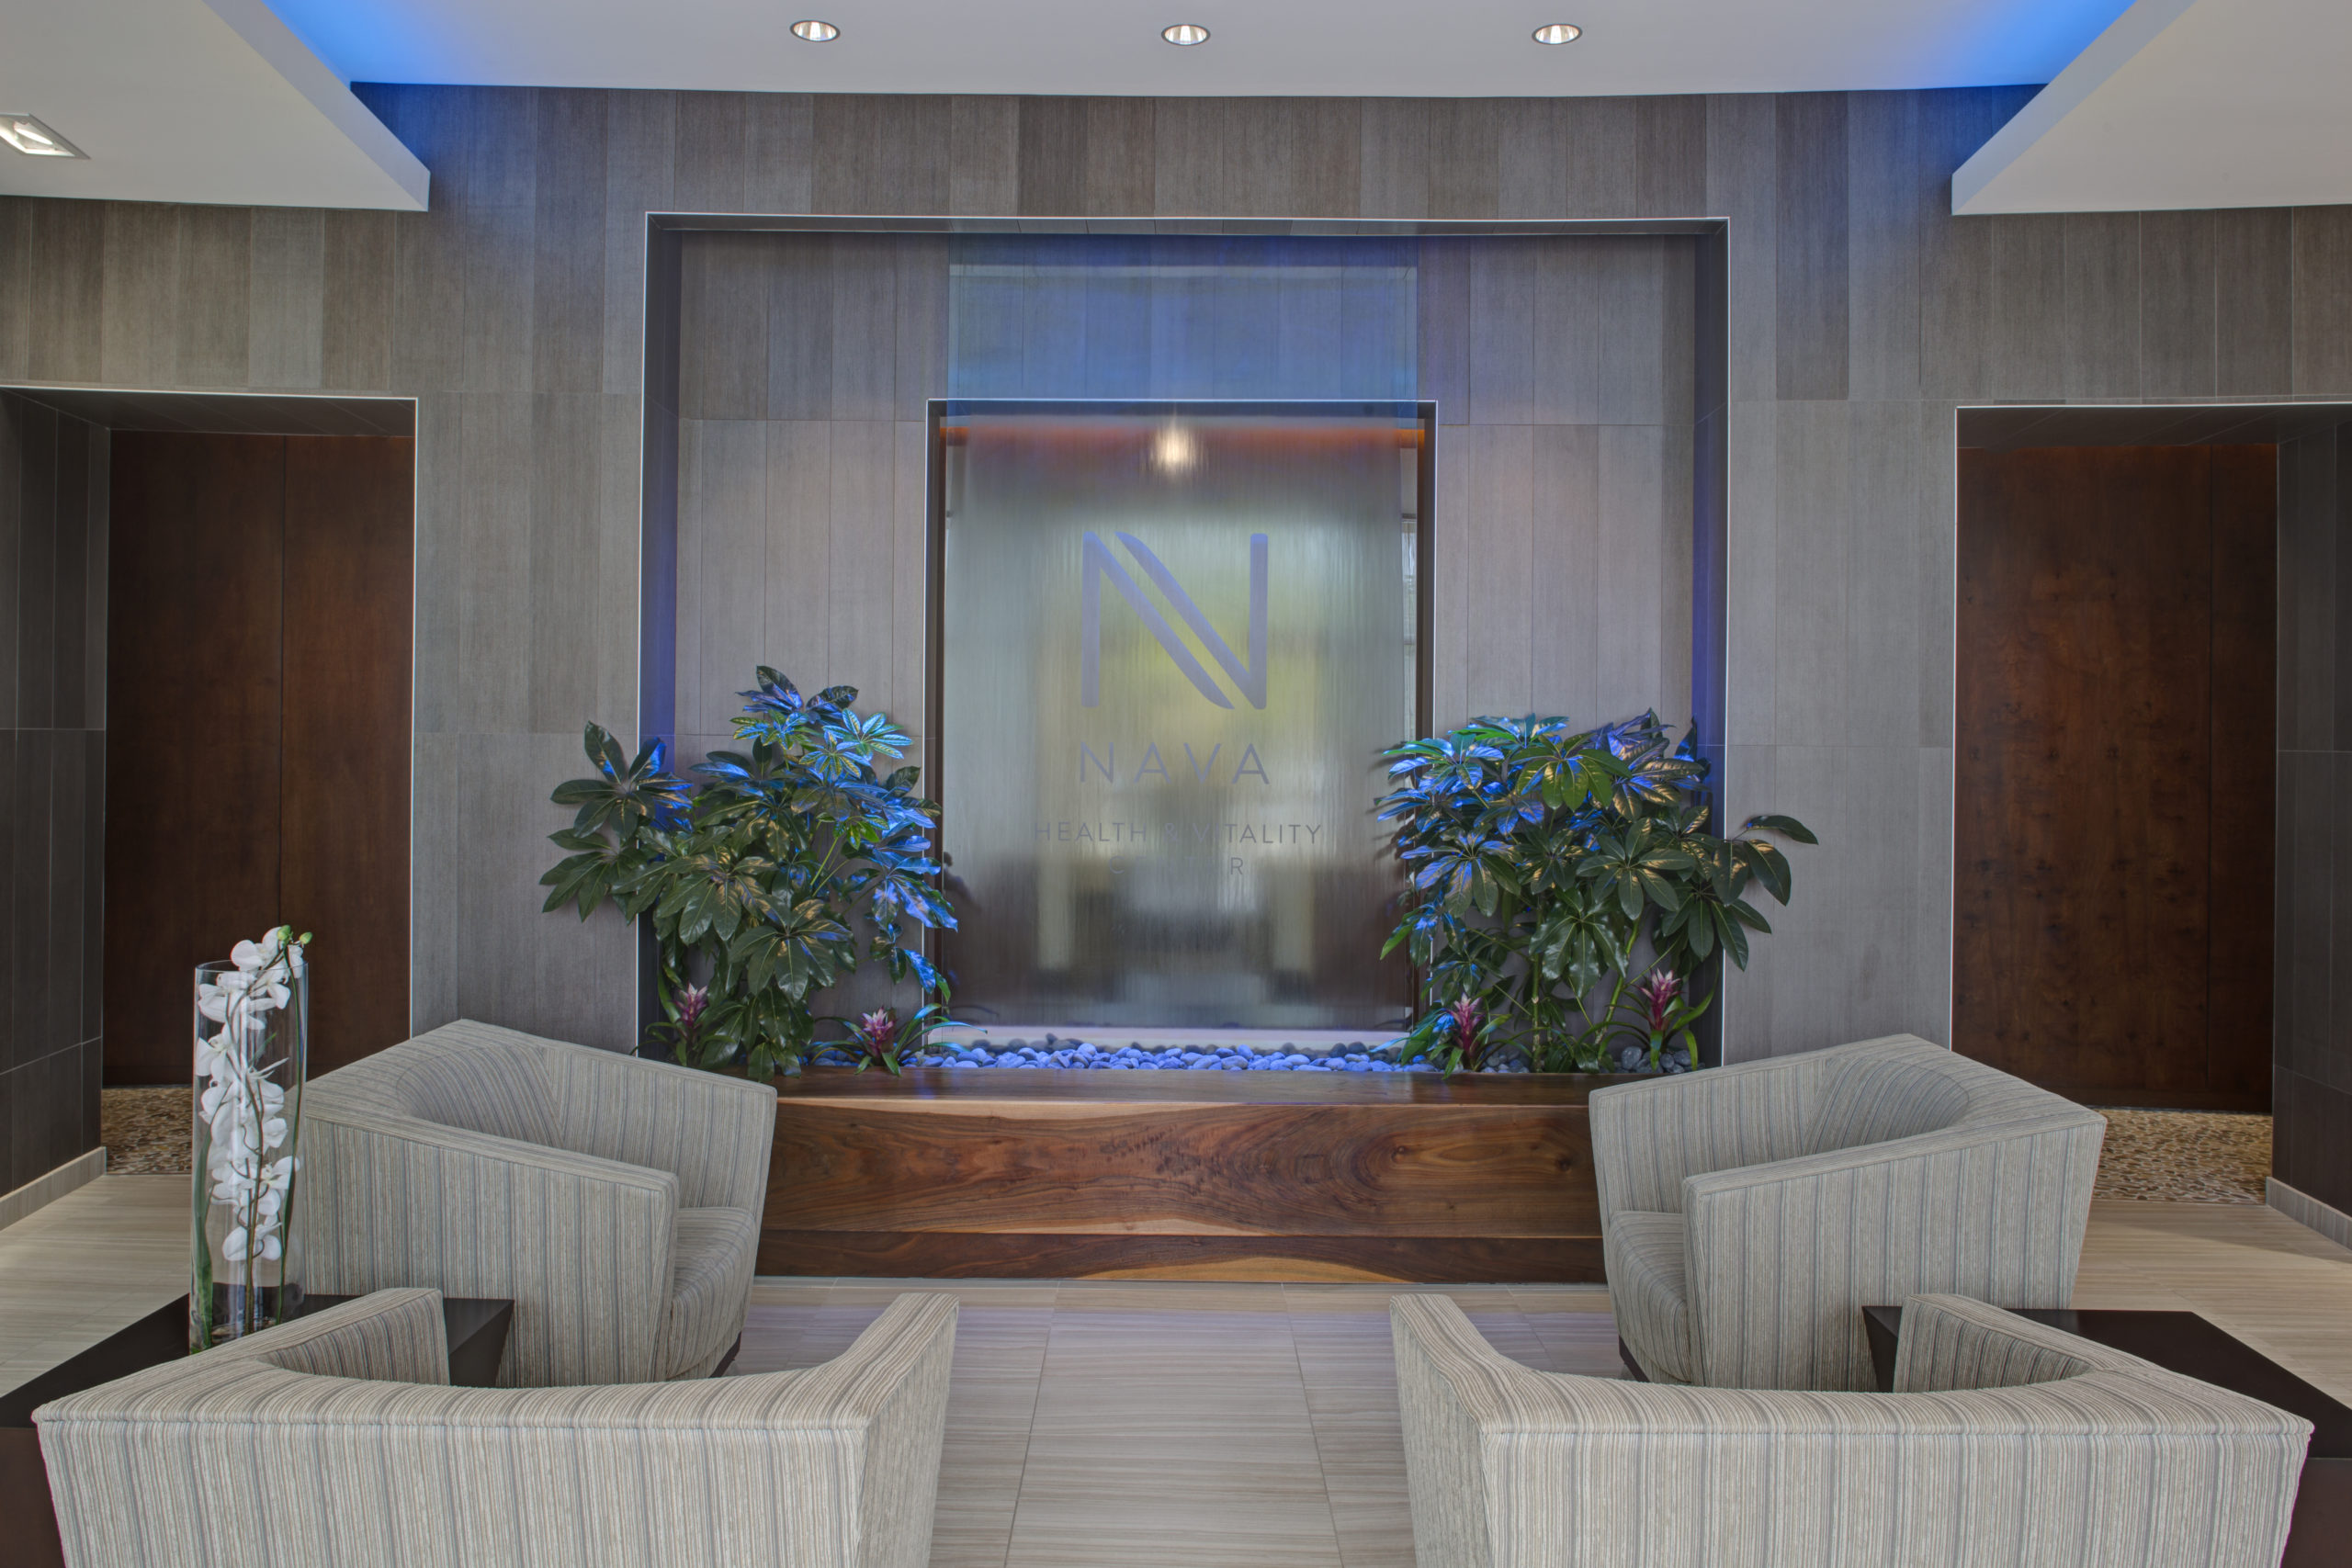 Interior lobby of Nava Health, a leading chain of integrative medicine providers